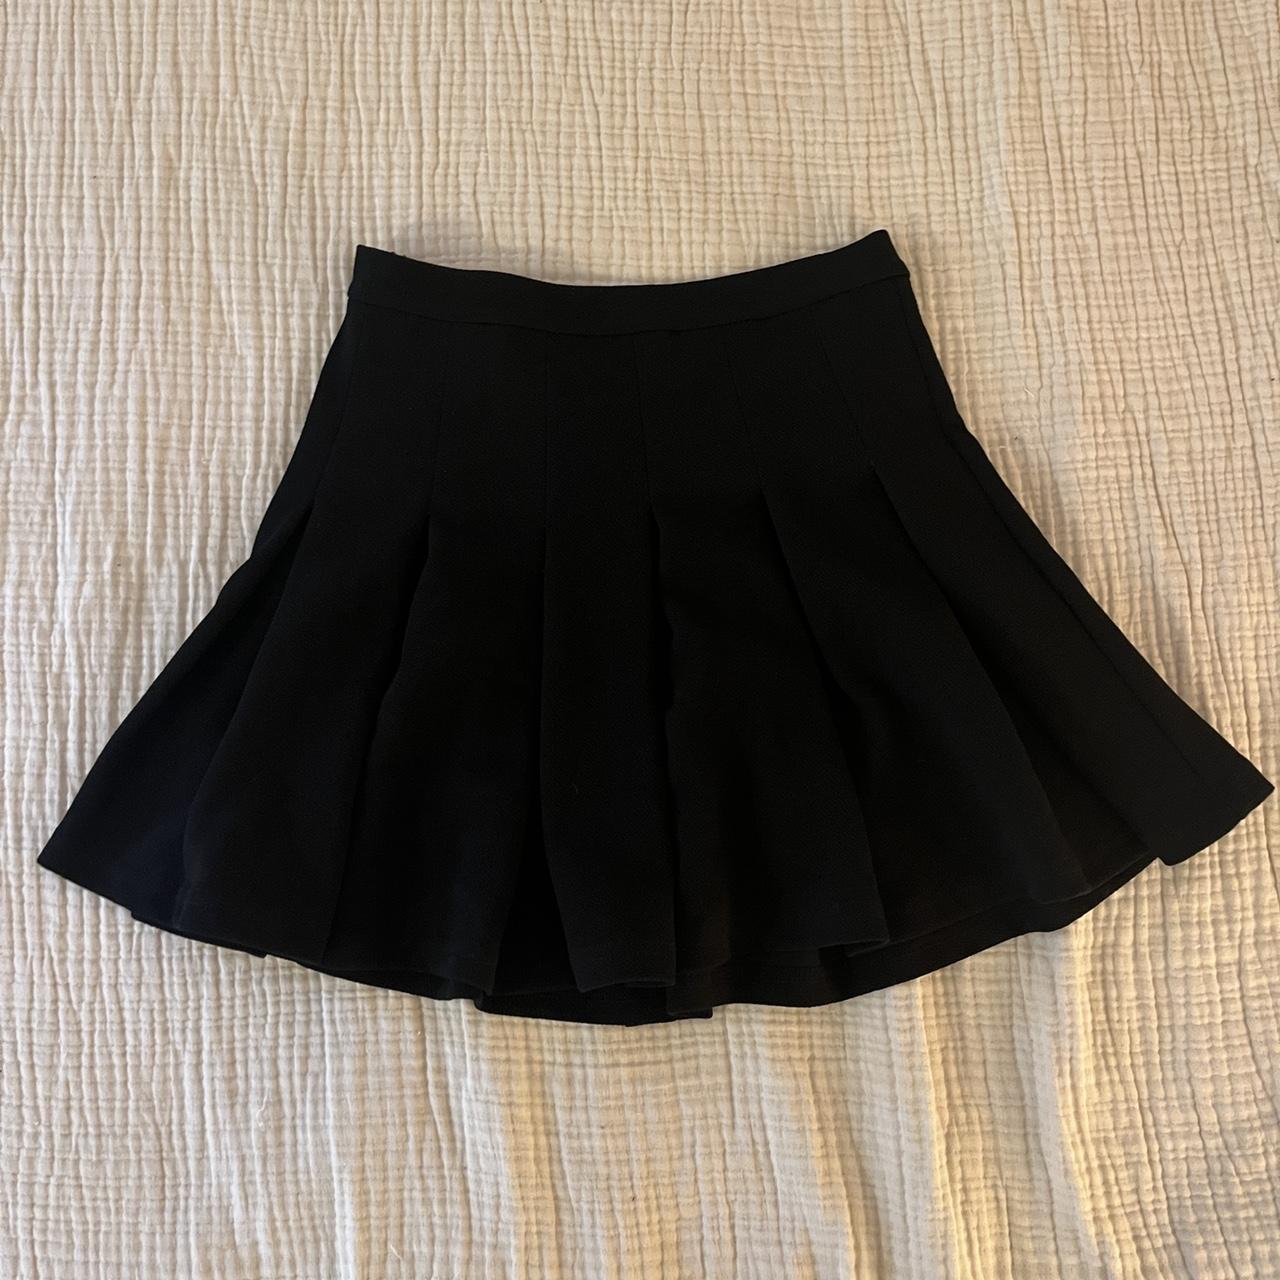 black pleated high waisted skirt! best fits a... - Depop